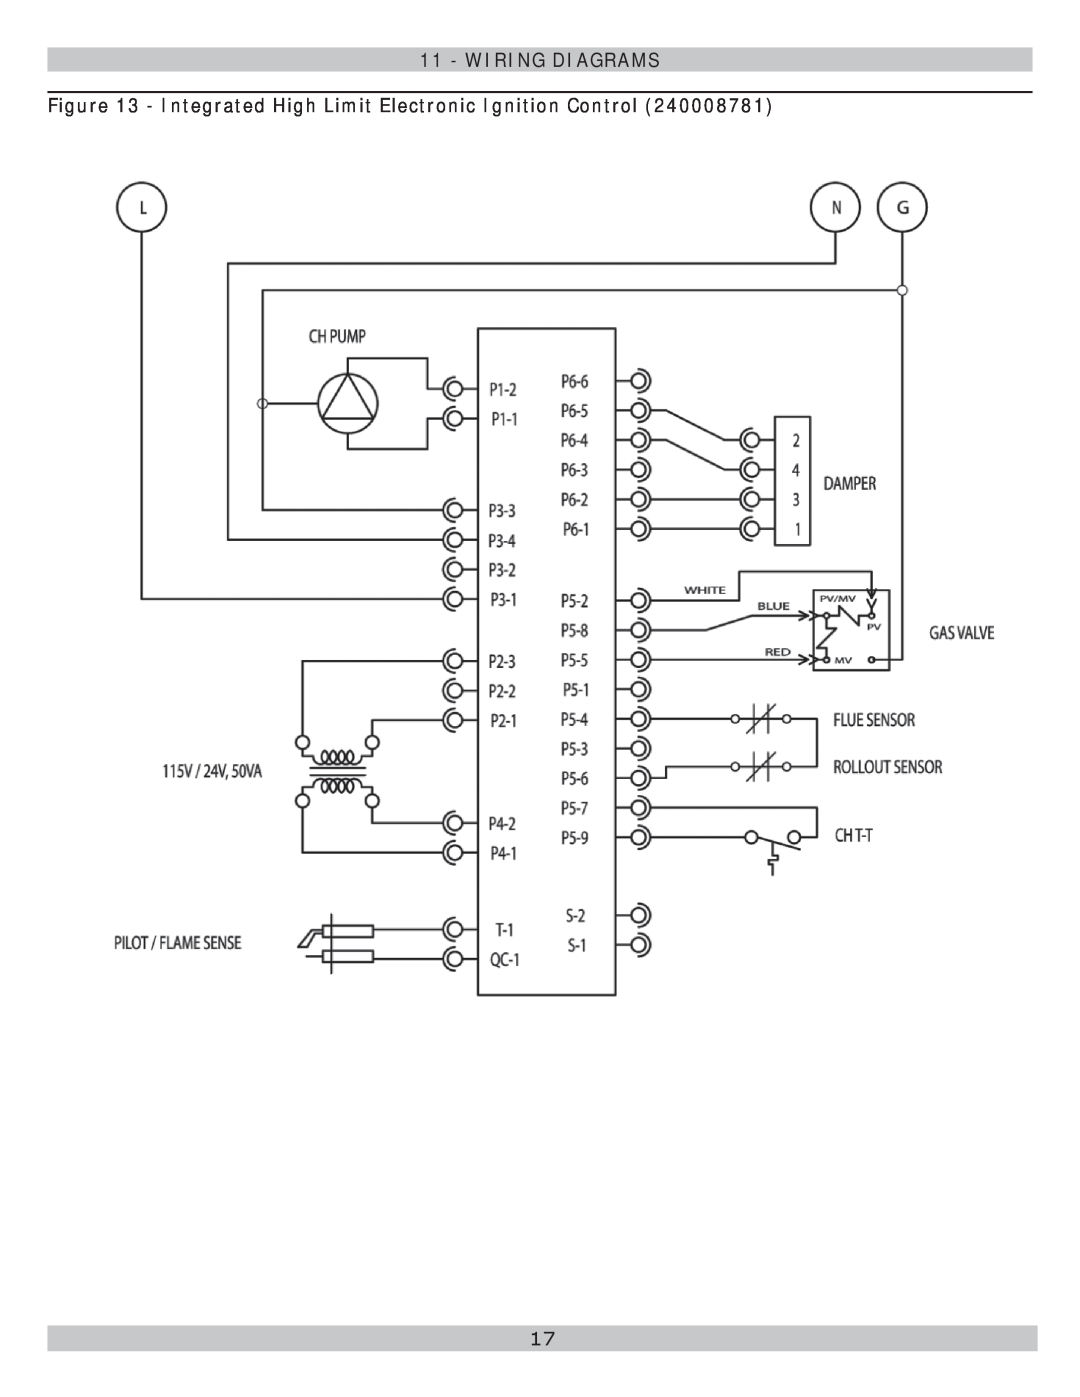 Lennox International Inc GWB8-245E-2, GWB8-262E-2 Integrated High Limit Electronic Ignition Control, Wiring Diagrams 